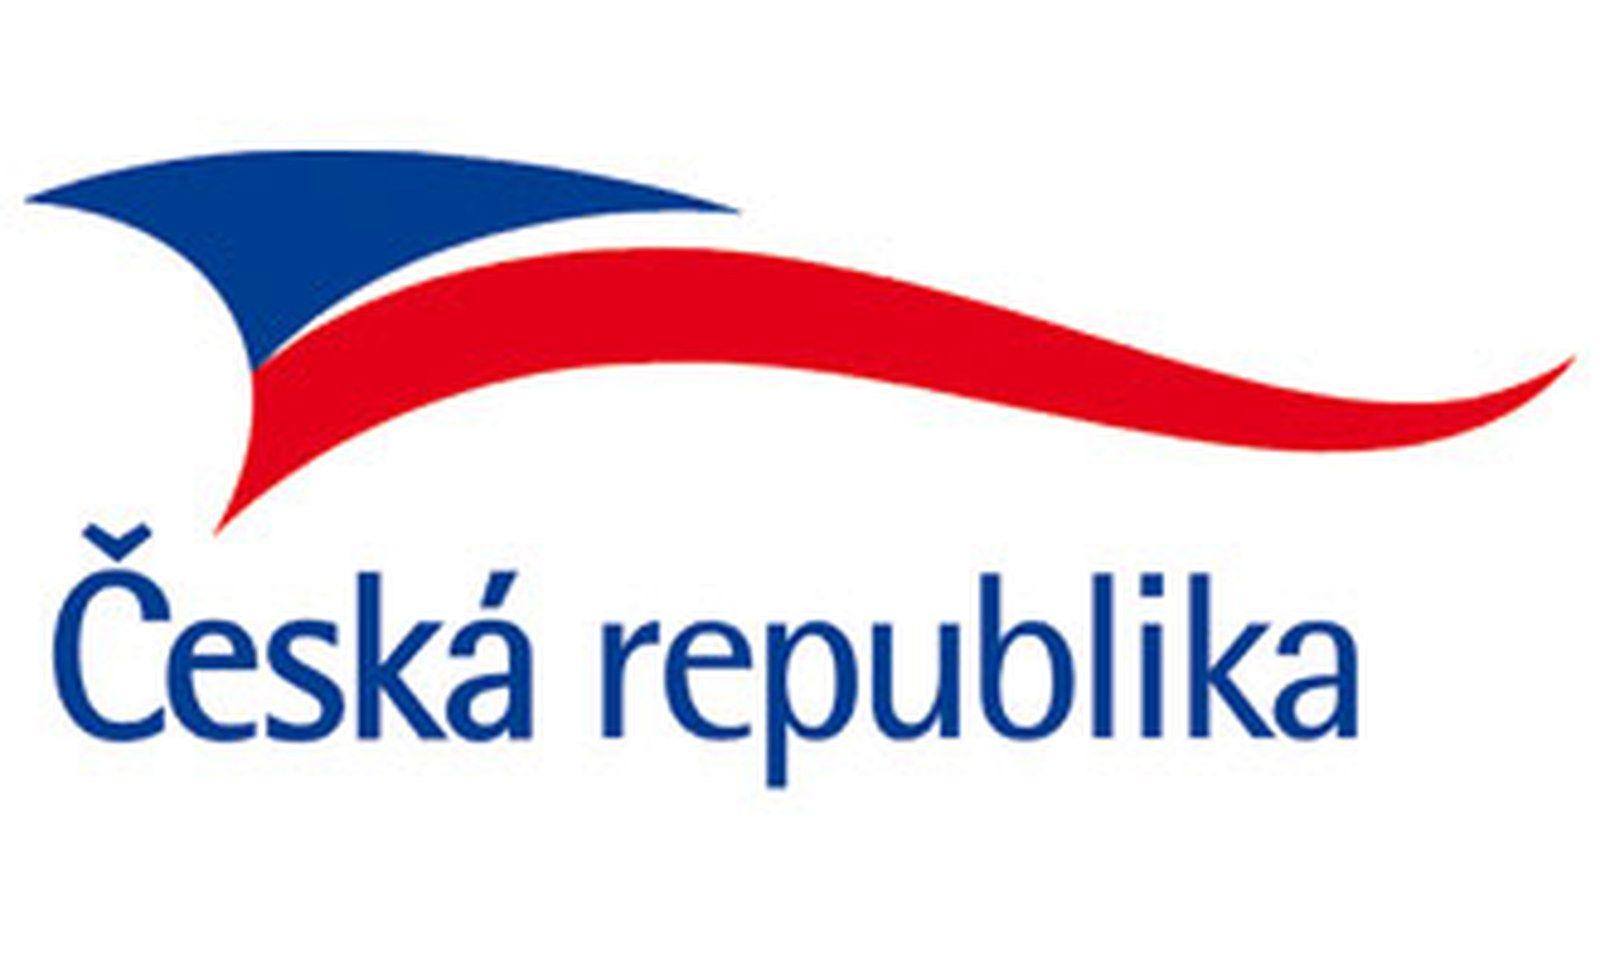 CzechTourism Logo - CzechTourism like